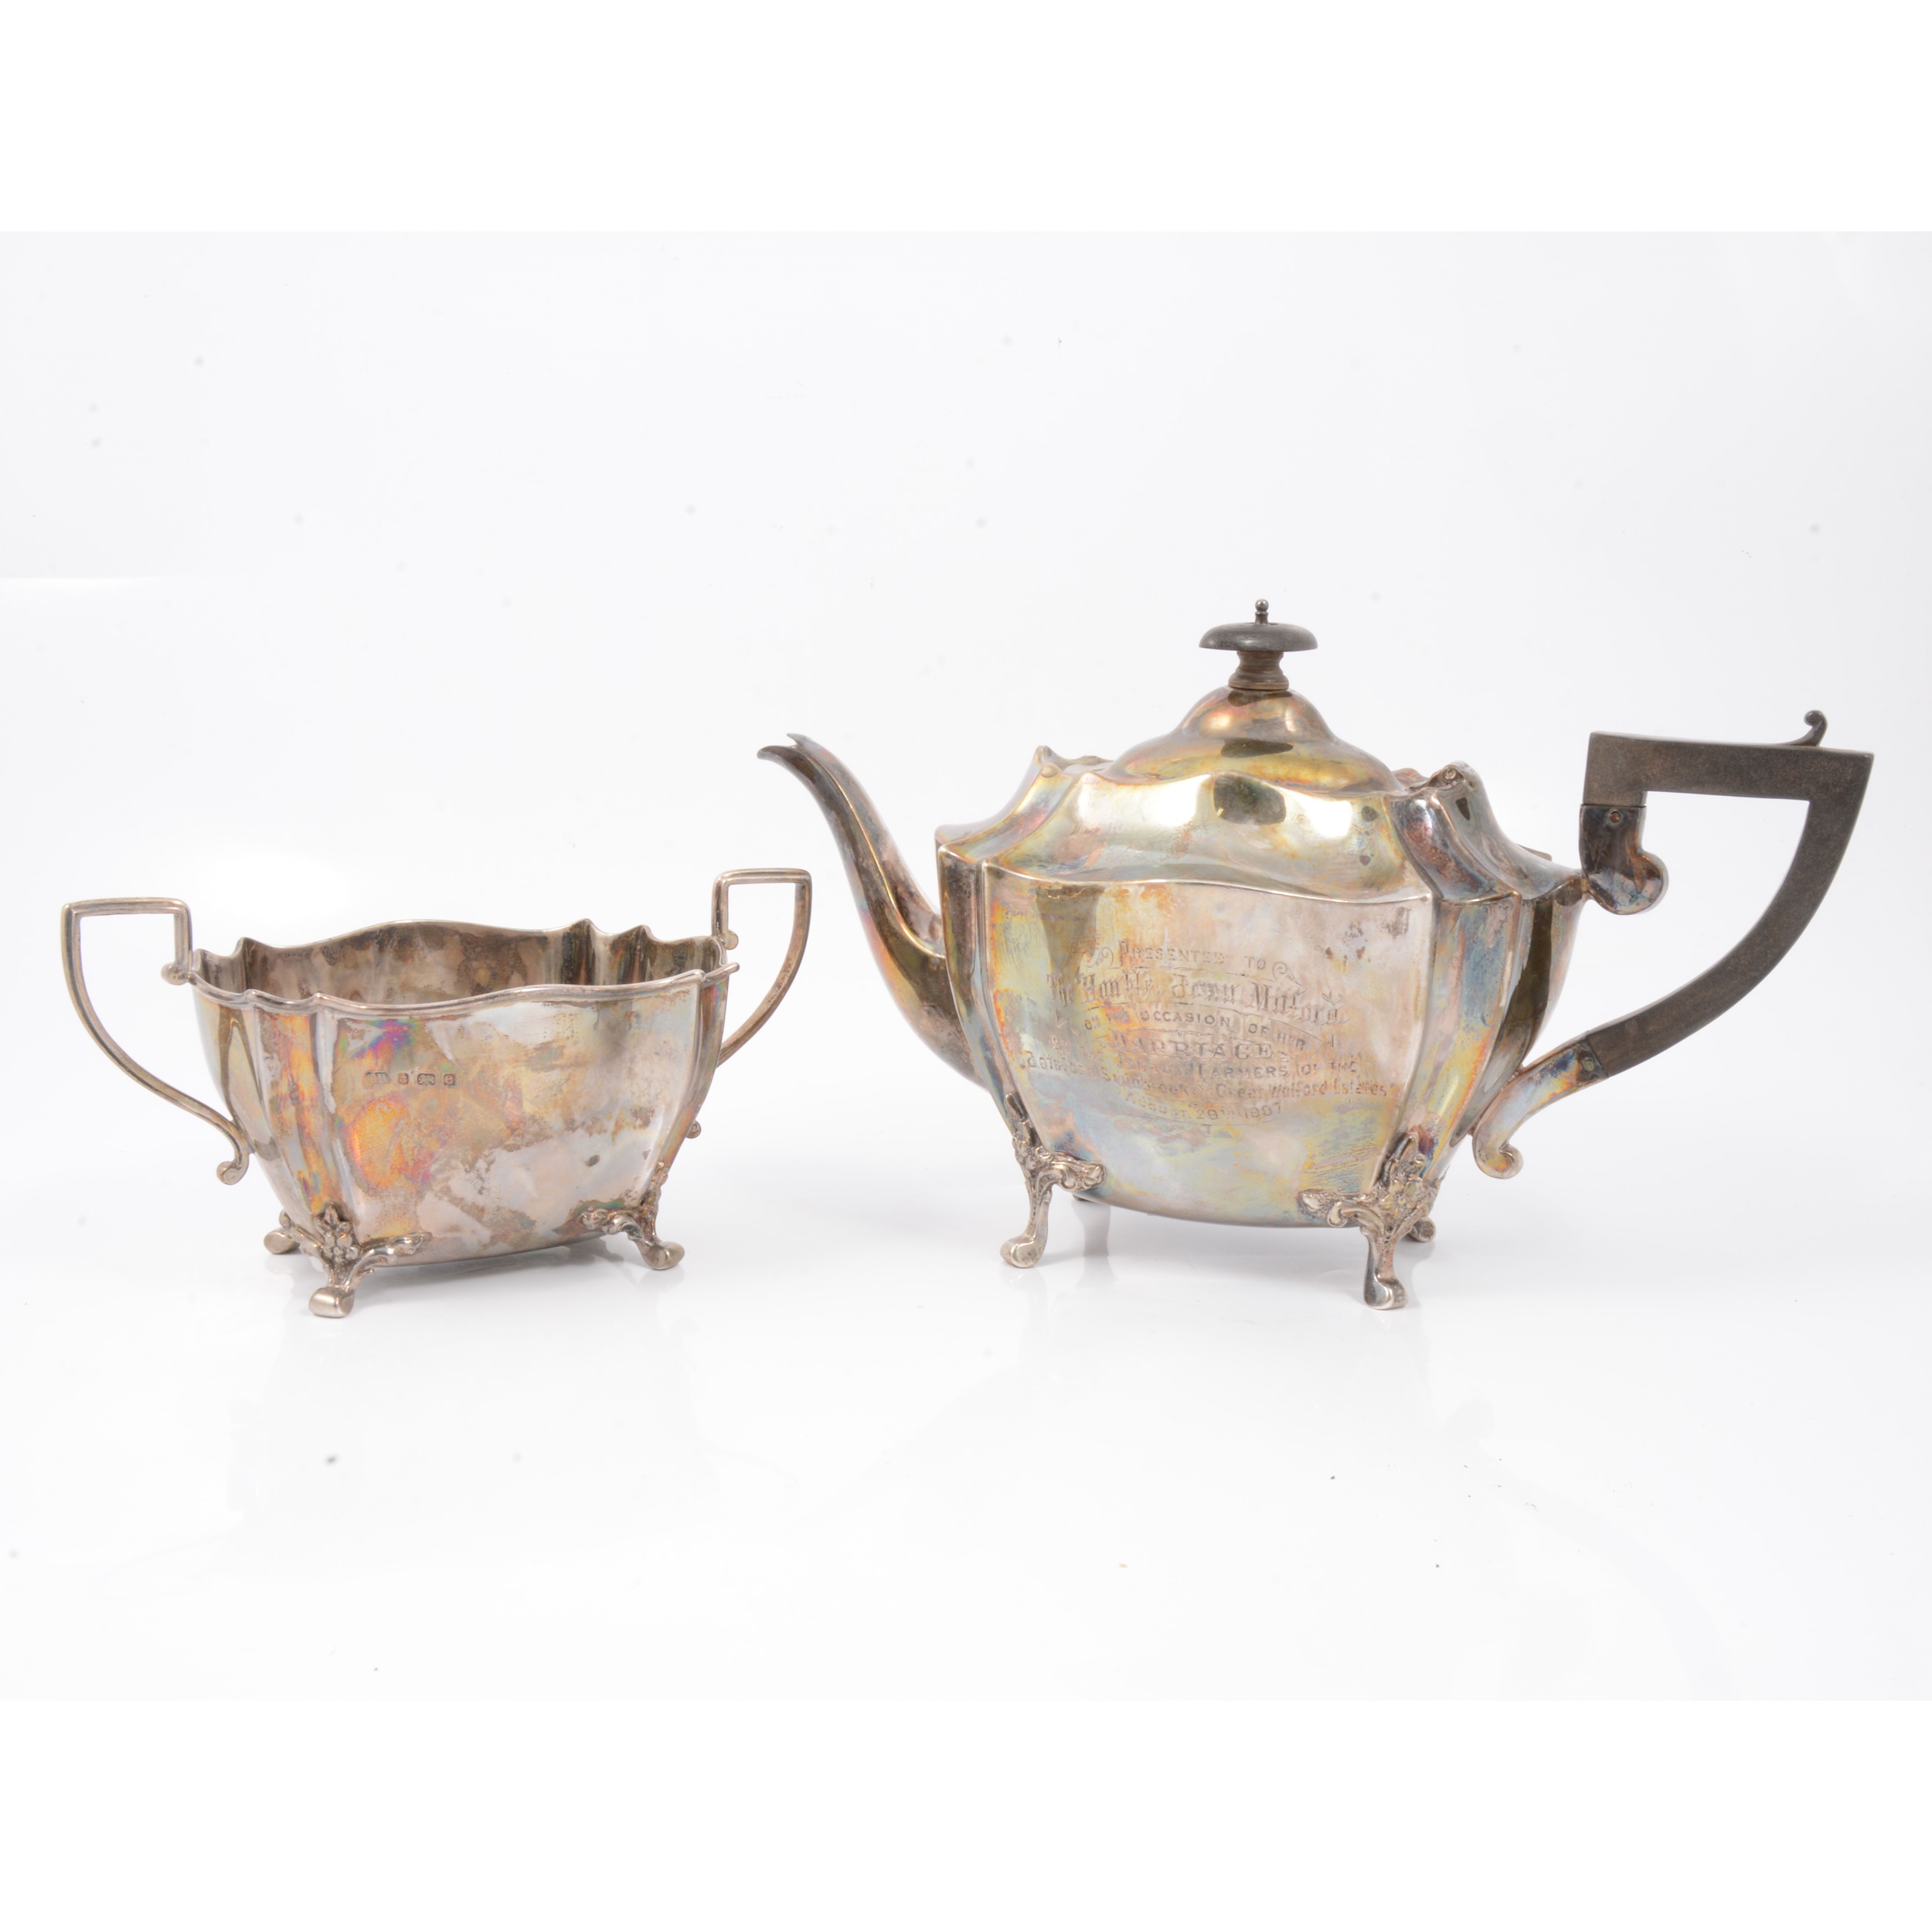 Silver teapot and sugar bowl, Charles Harris, Birmingham 1904.